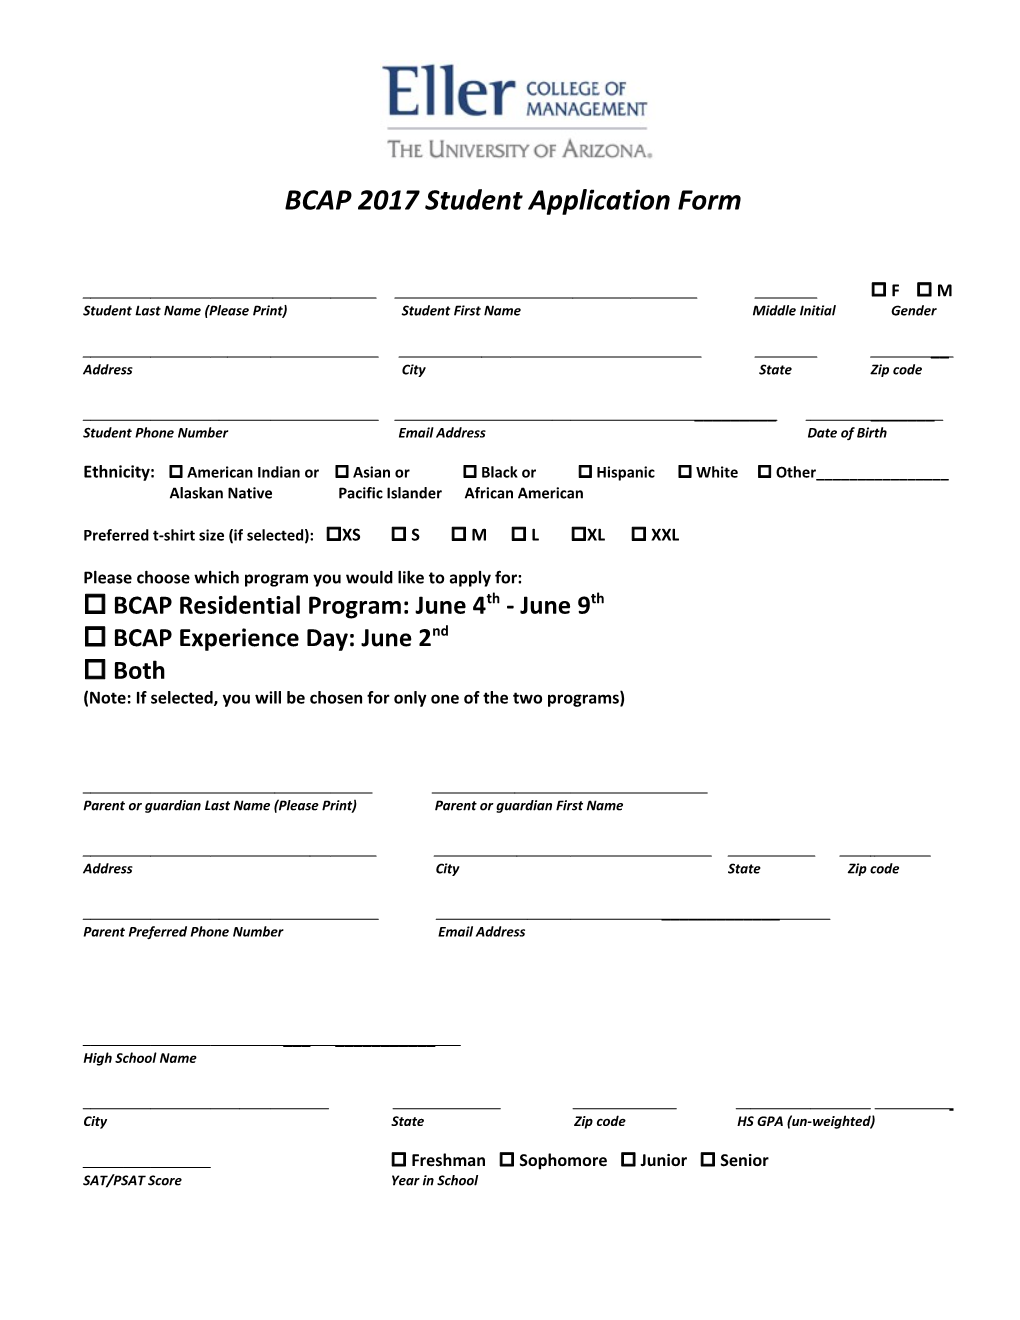 BCAP 2017 Student Application Form